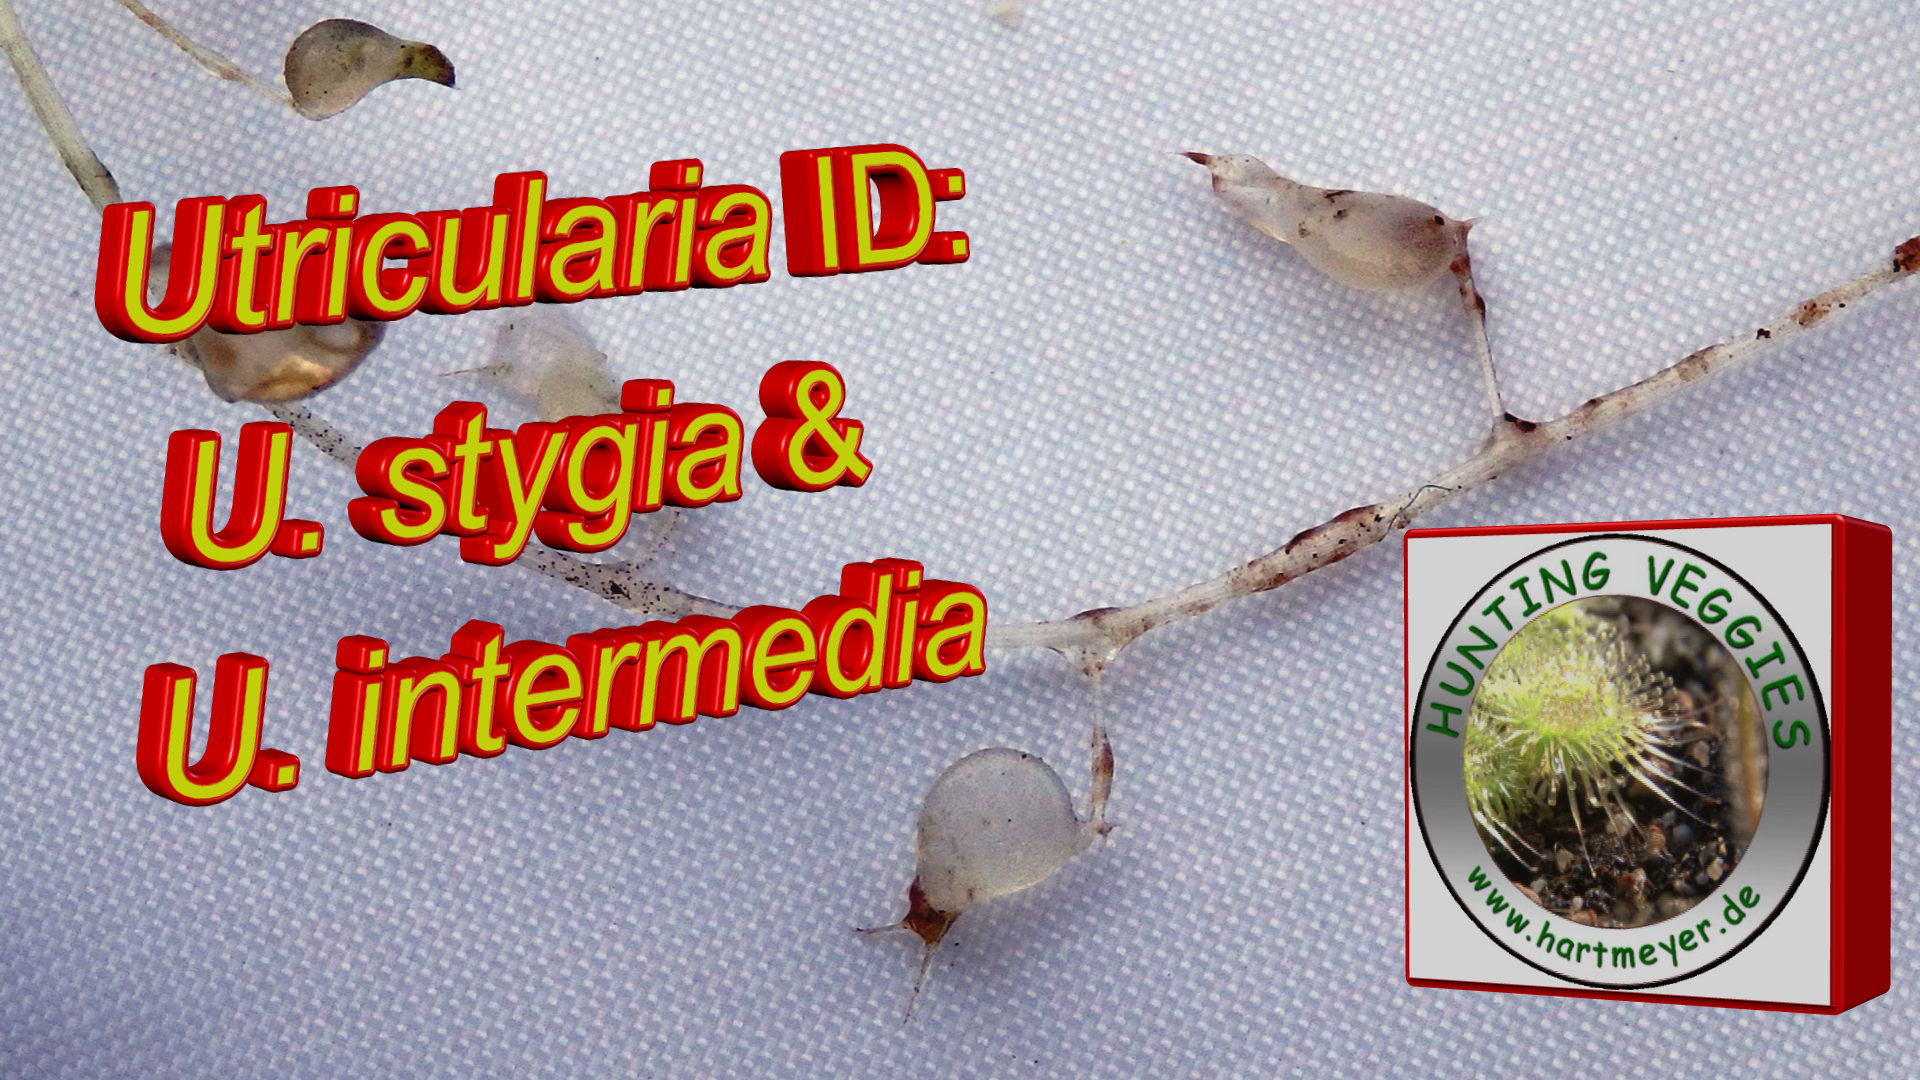 Utricularia stygia & U. intermedia Thumb